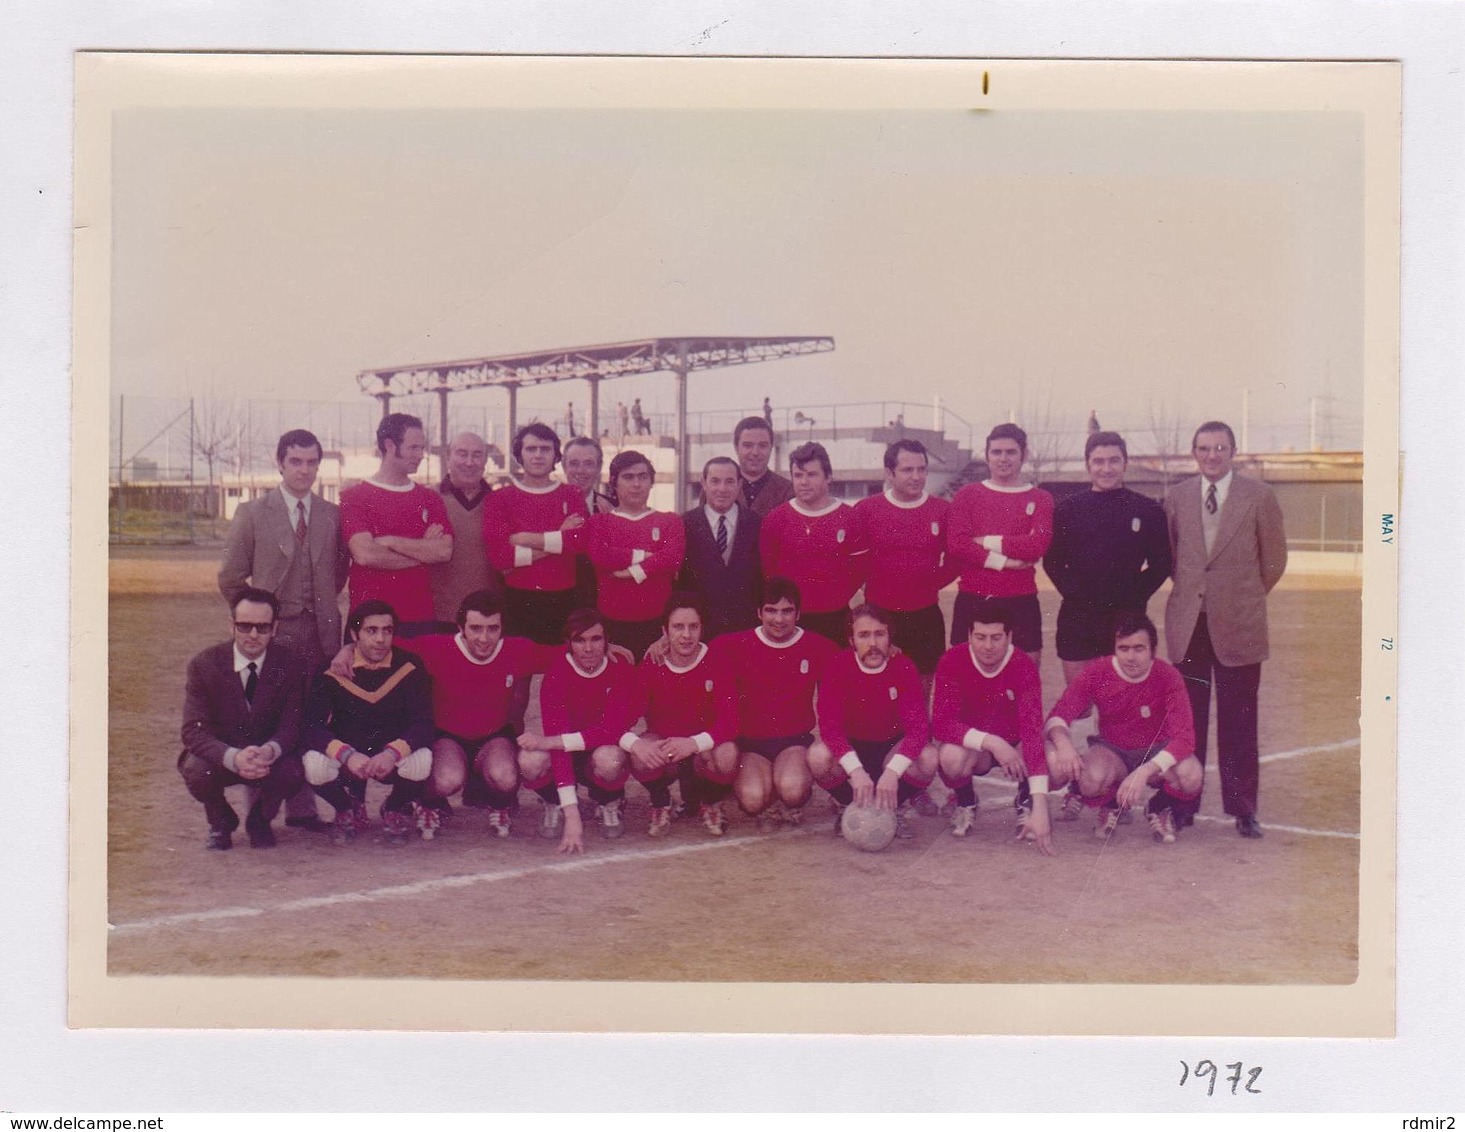 1286/ Fútbol / Football / Soccer / Calcio / Fußball Amateur. TABACOS DE FILIPINAS, C. D. (1972). - Deportes